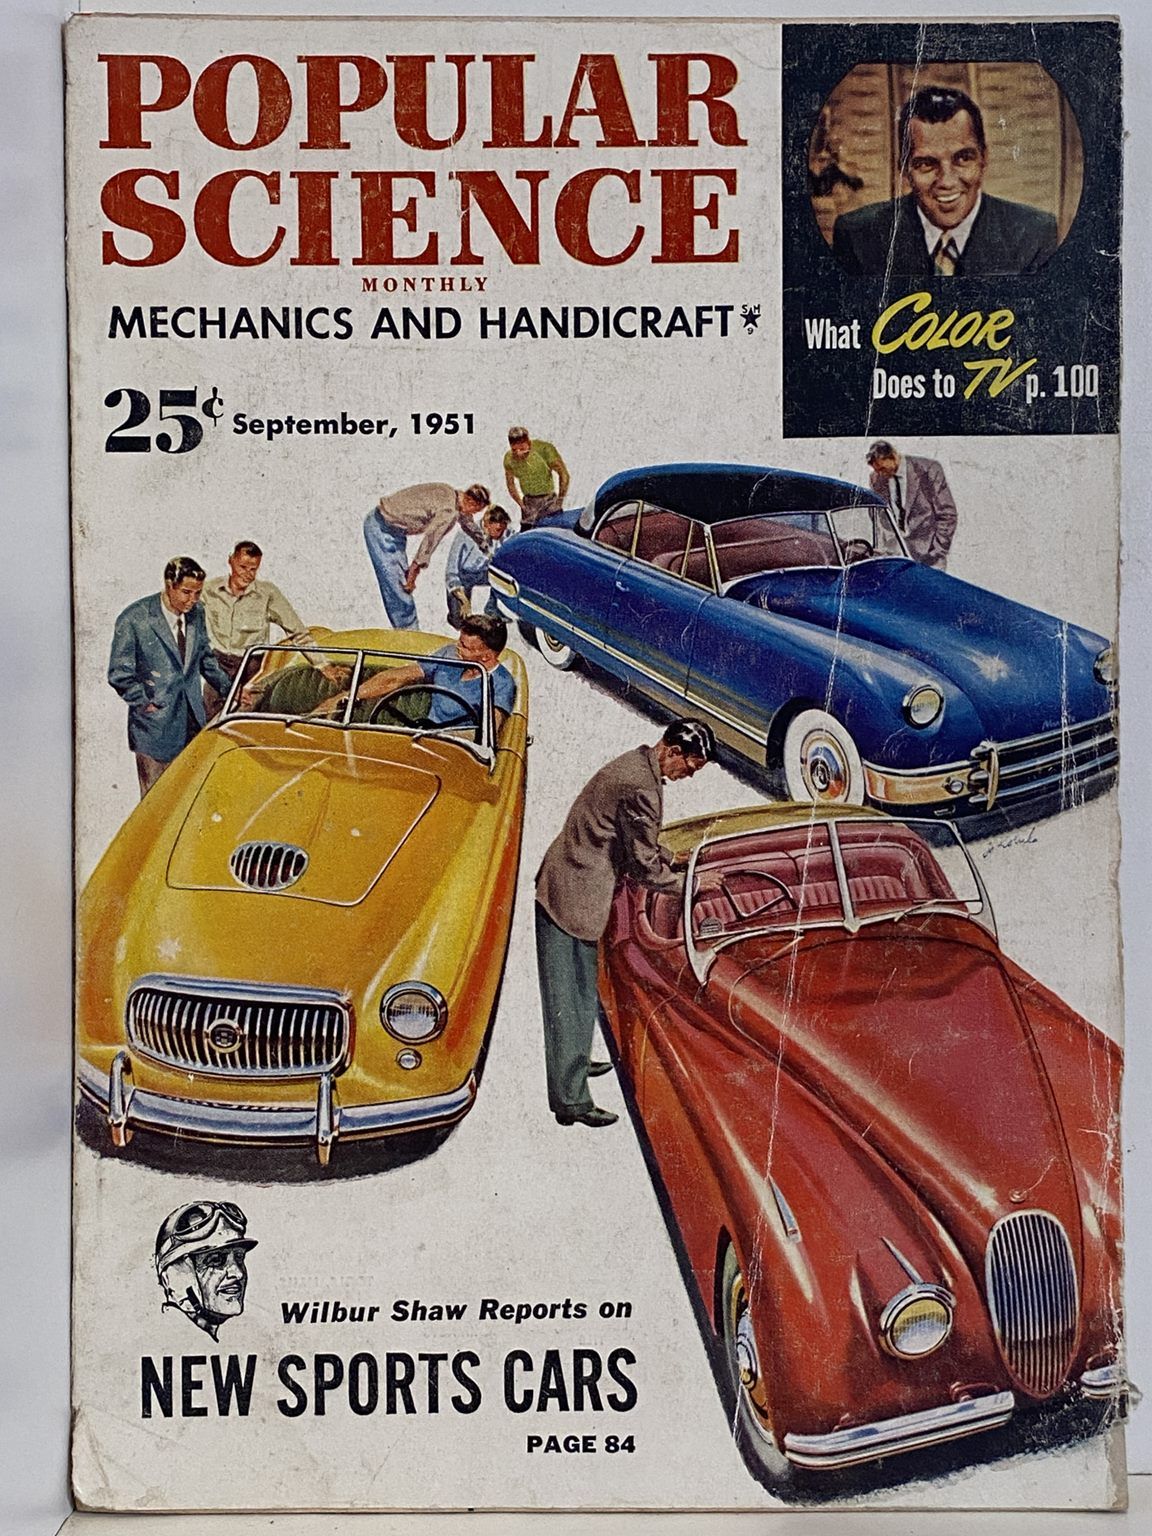 VINTAGE MAGAZINE: Popular Science, Vol. 159, No. 3 - September 1951